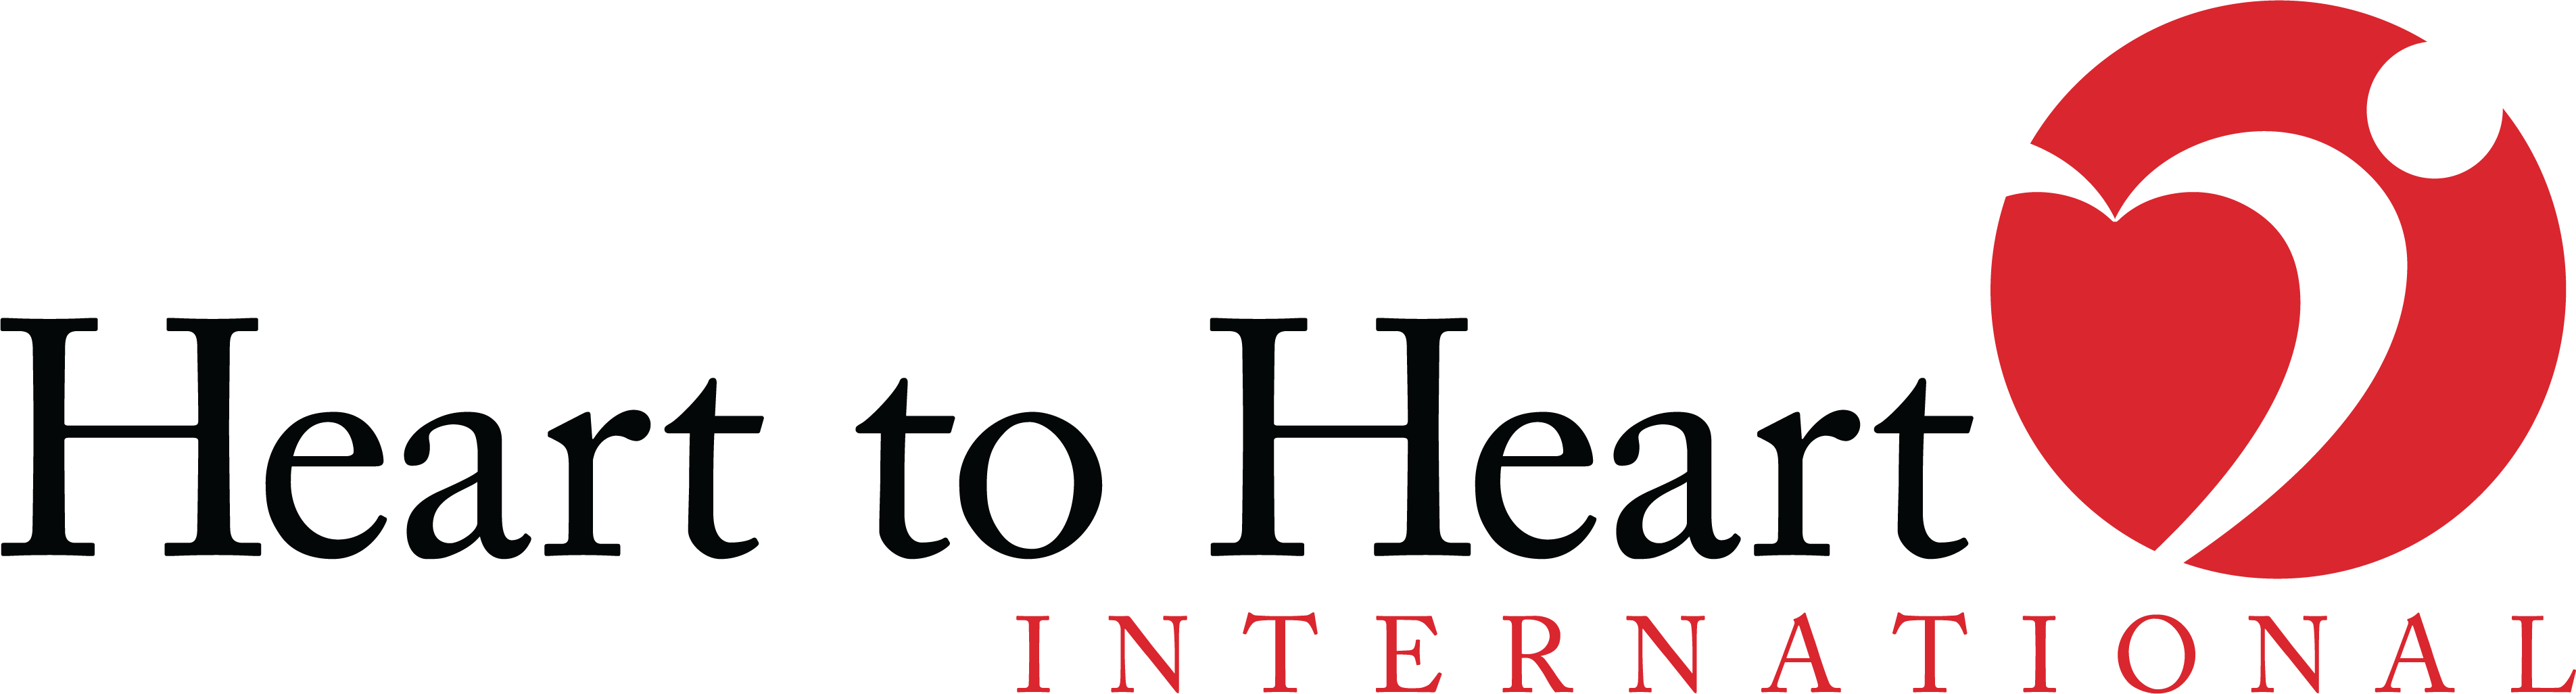 Heart to Heart International Laboratory Application Form 